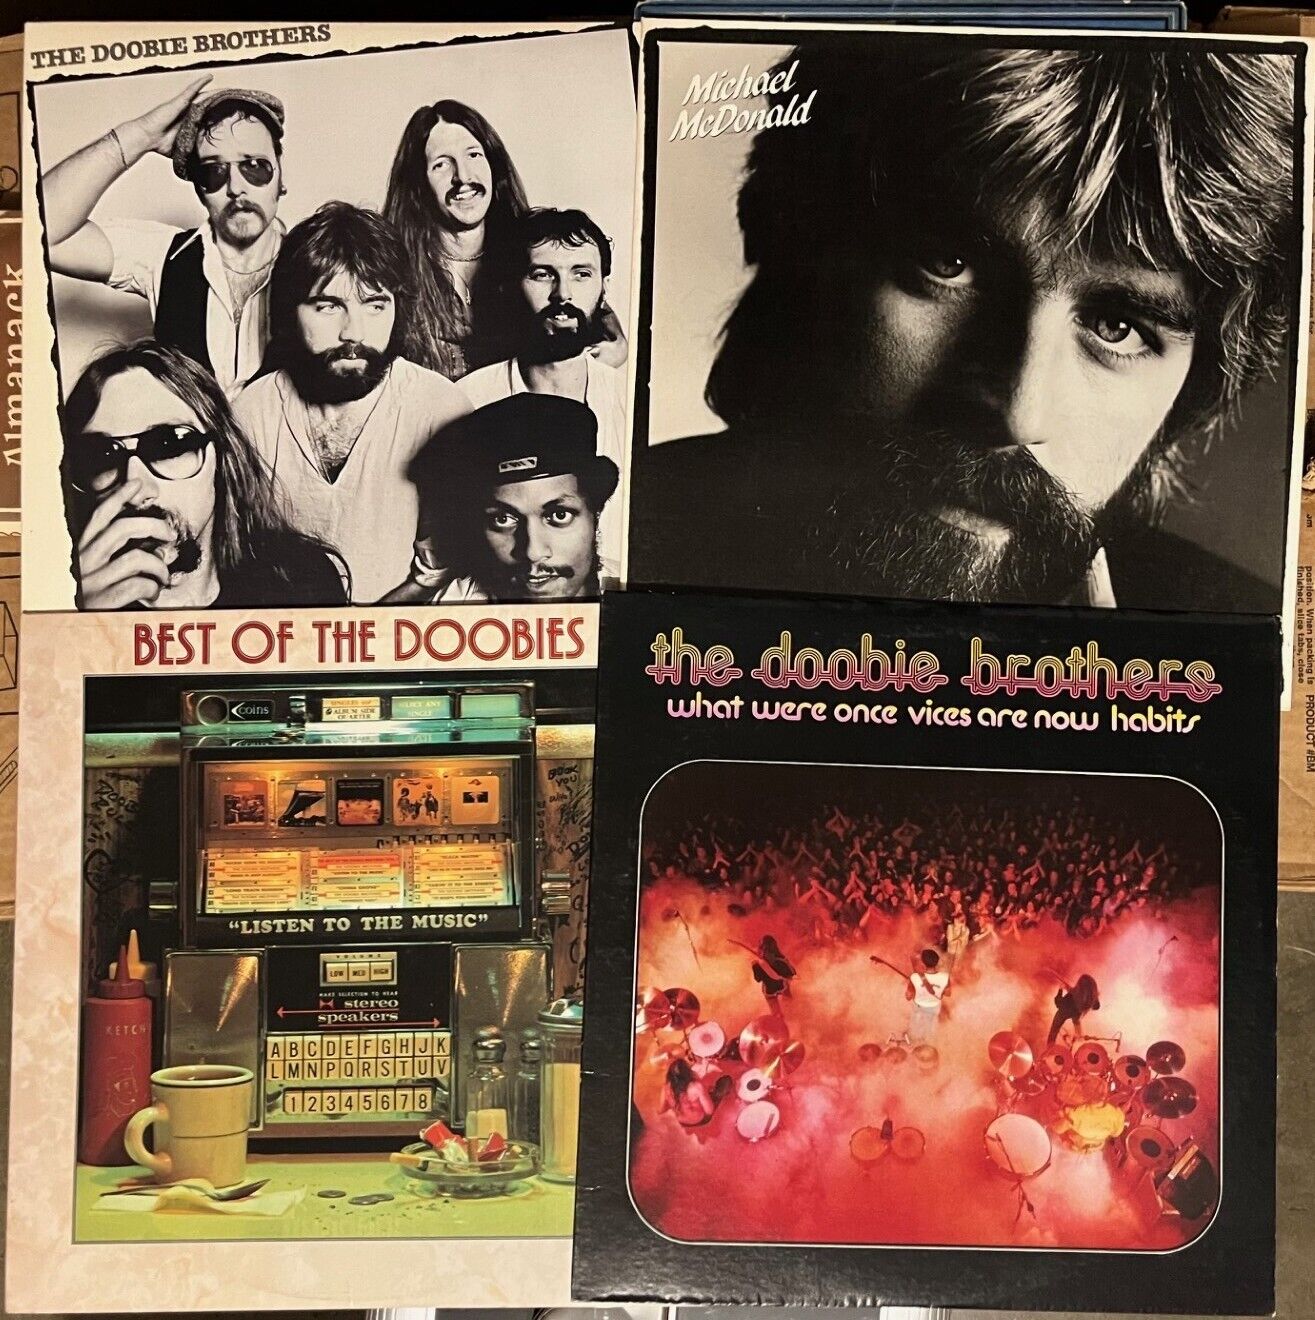 DOOBIE BROTHERS + MICHAEL MCDONALD LP LOT - BEST OF/WHAT VICES NOW HABITS vinyl